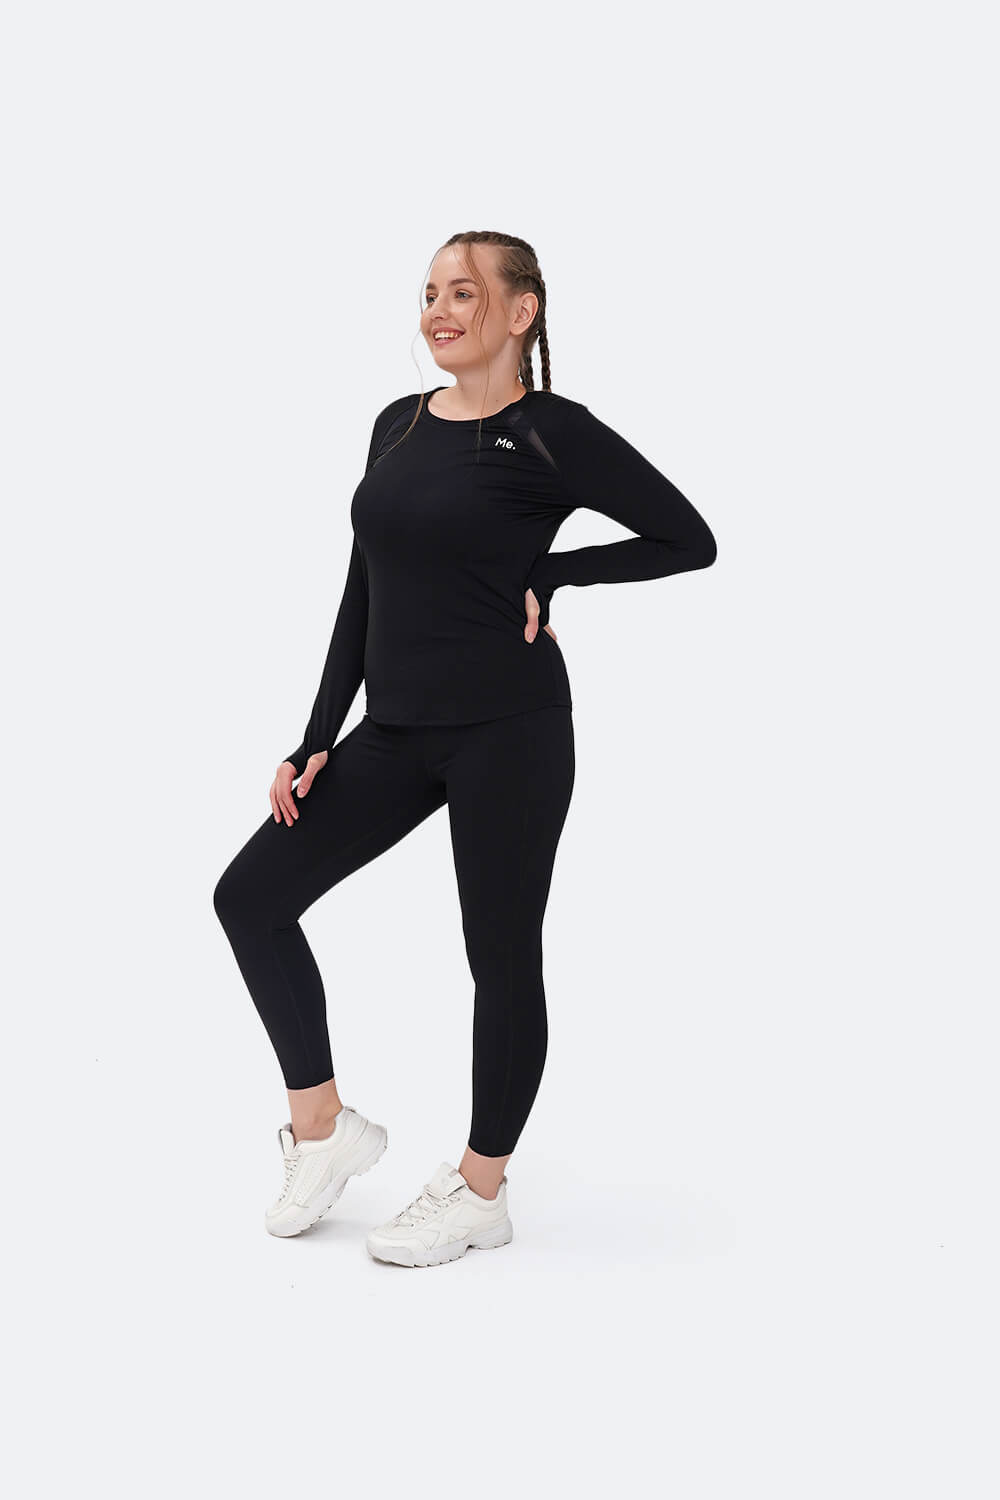 Athleta Mesh Yoga Inversion Tank Top Womens Size Small Black Shirt